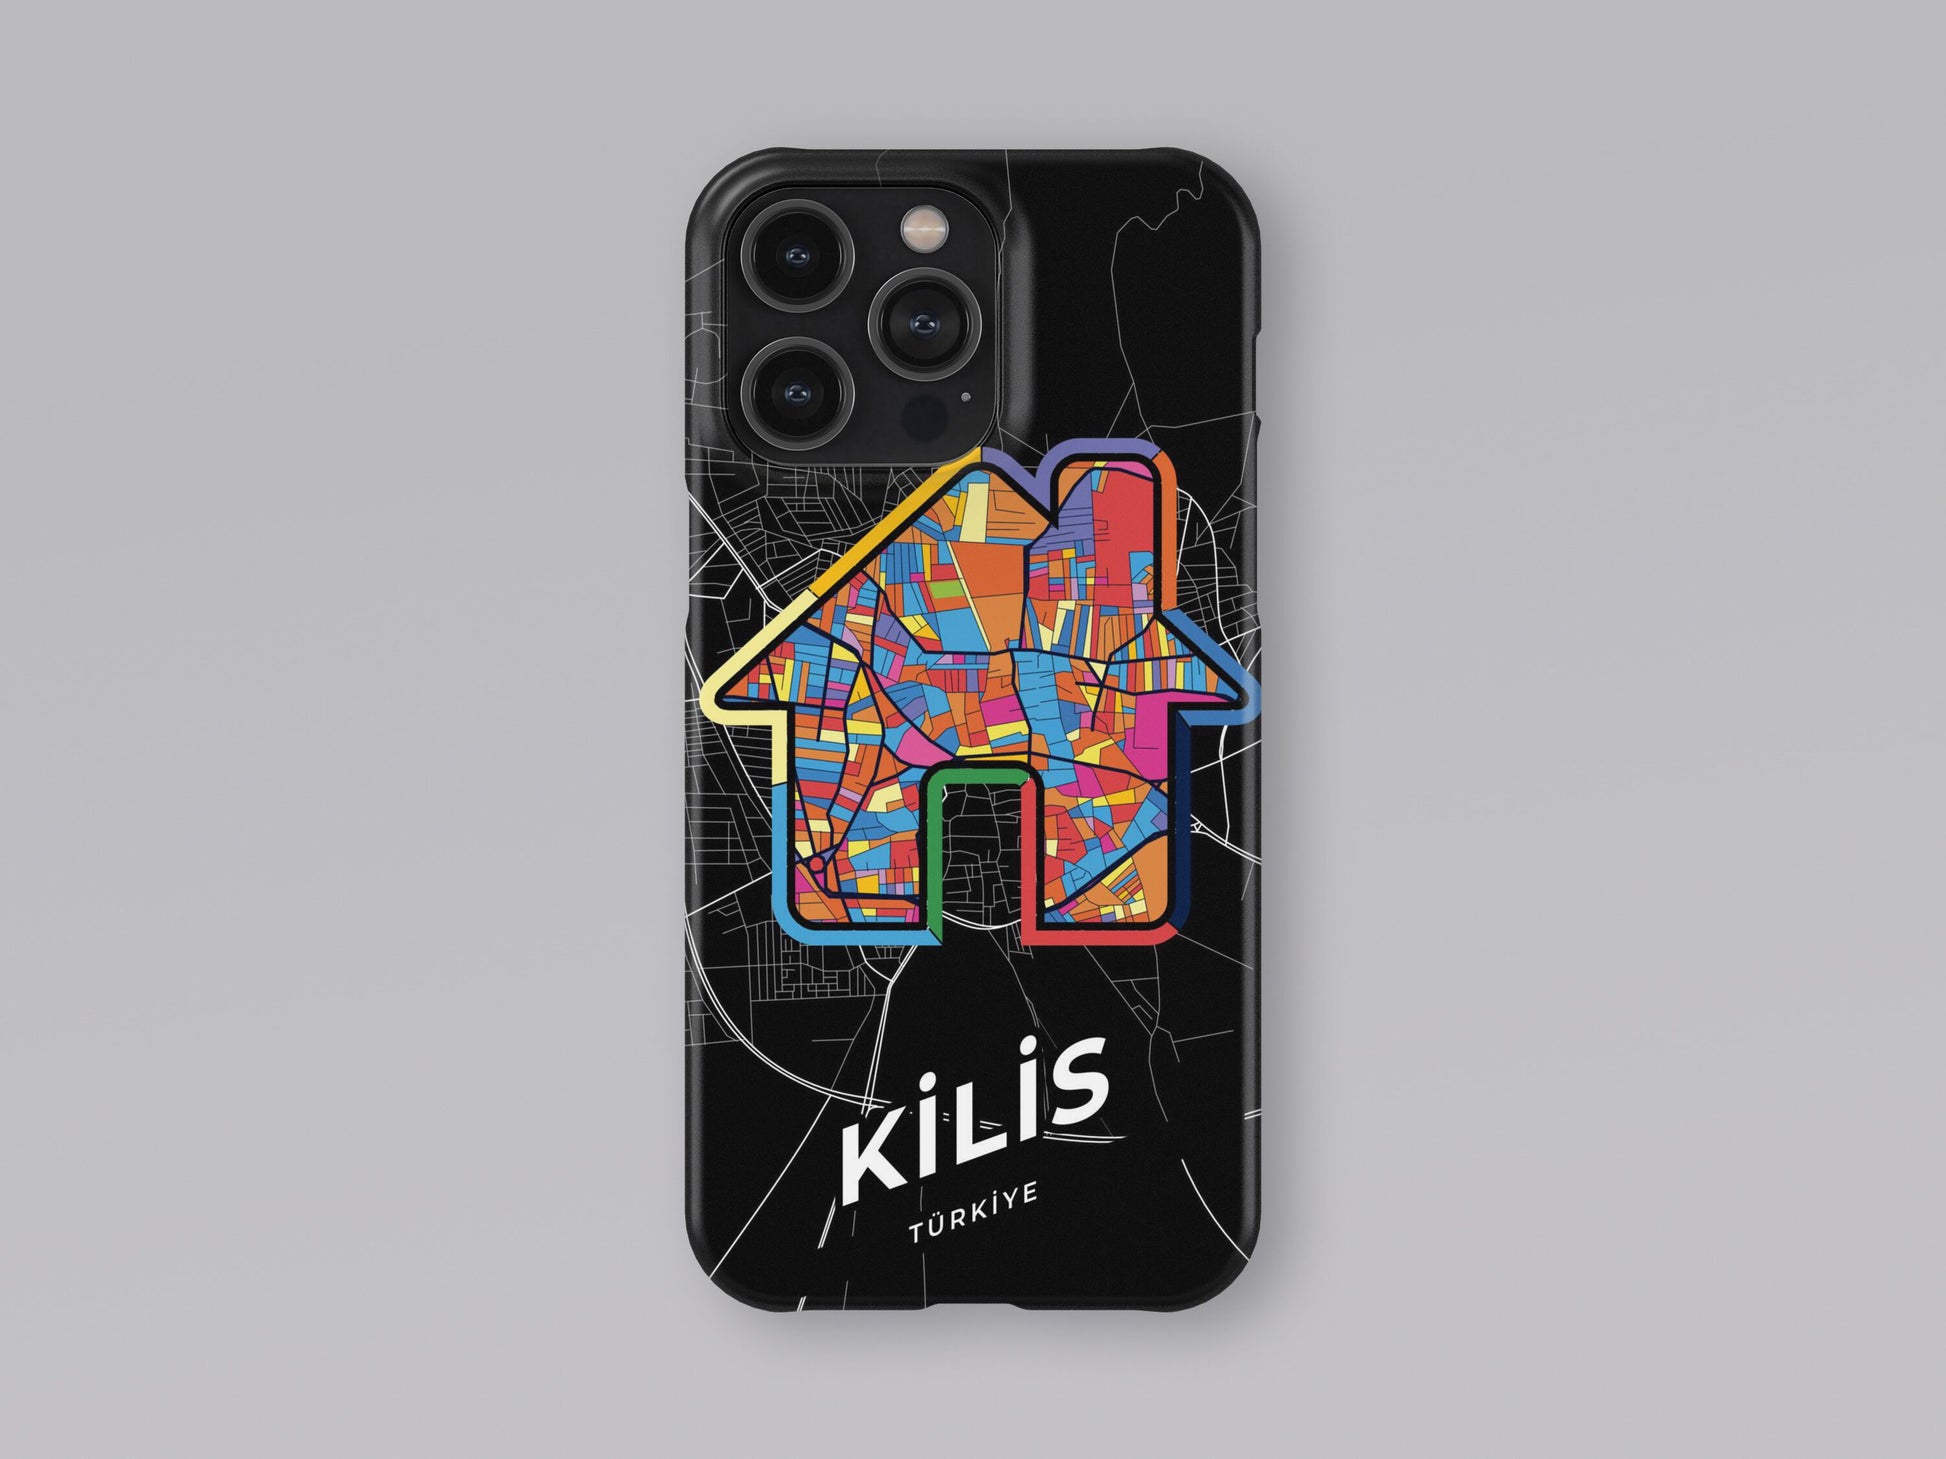 Kilis Turkey slim phone case with colorful icon. Birthday, wedding or housewarming gift. Couple match cases. 3